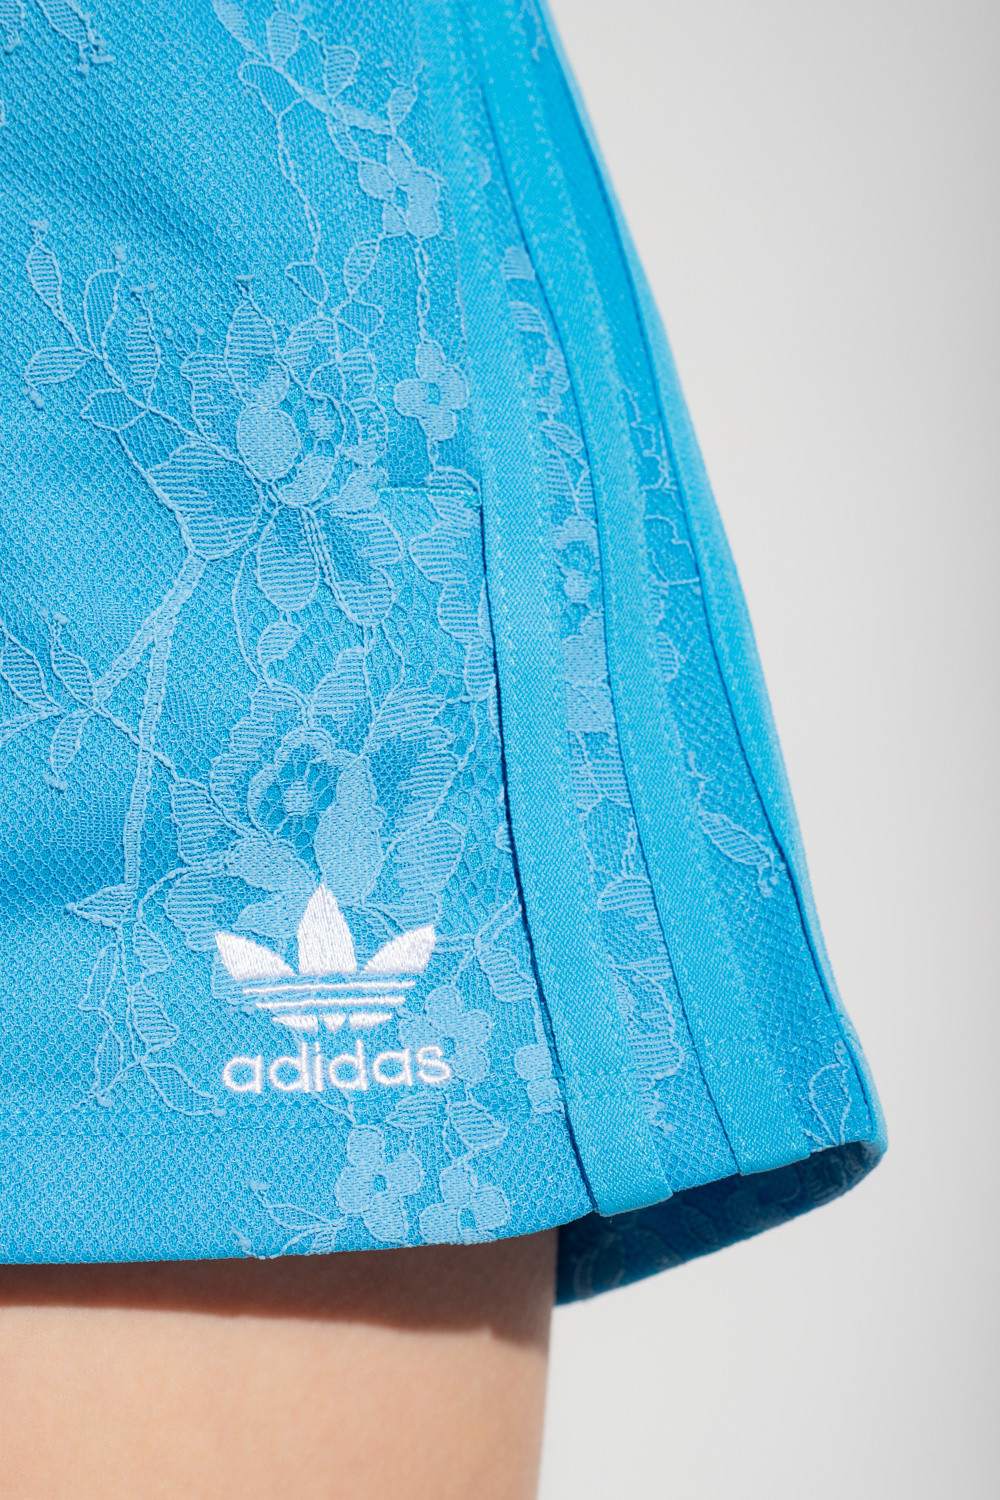 Blue Lace shorts ADIDAS Originals - Vitkac Canada